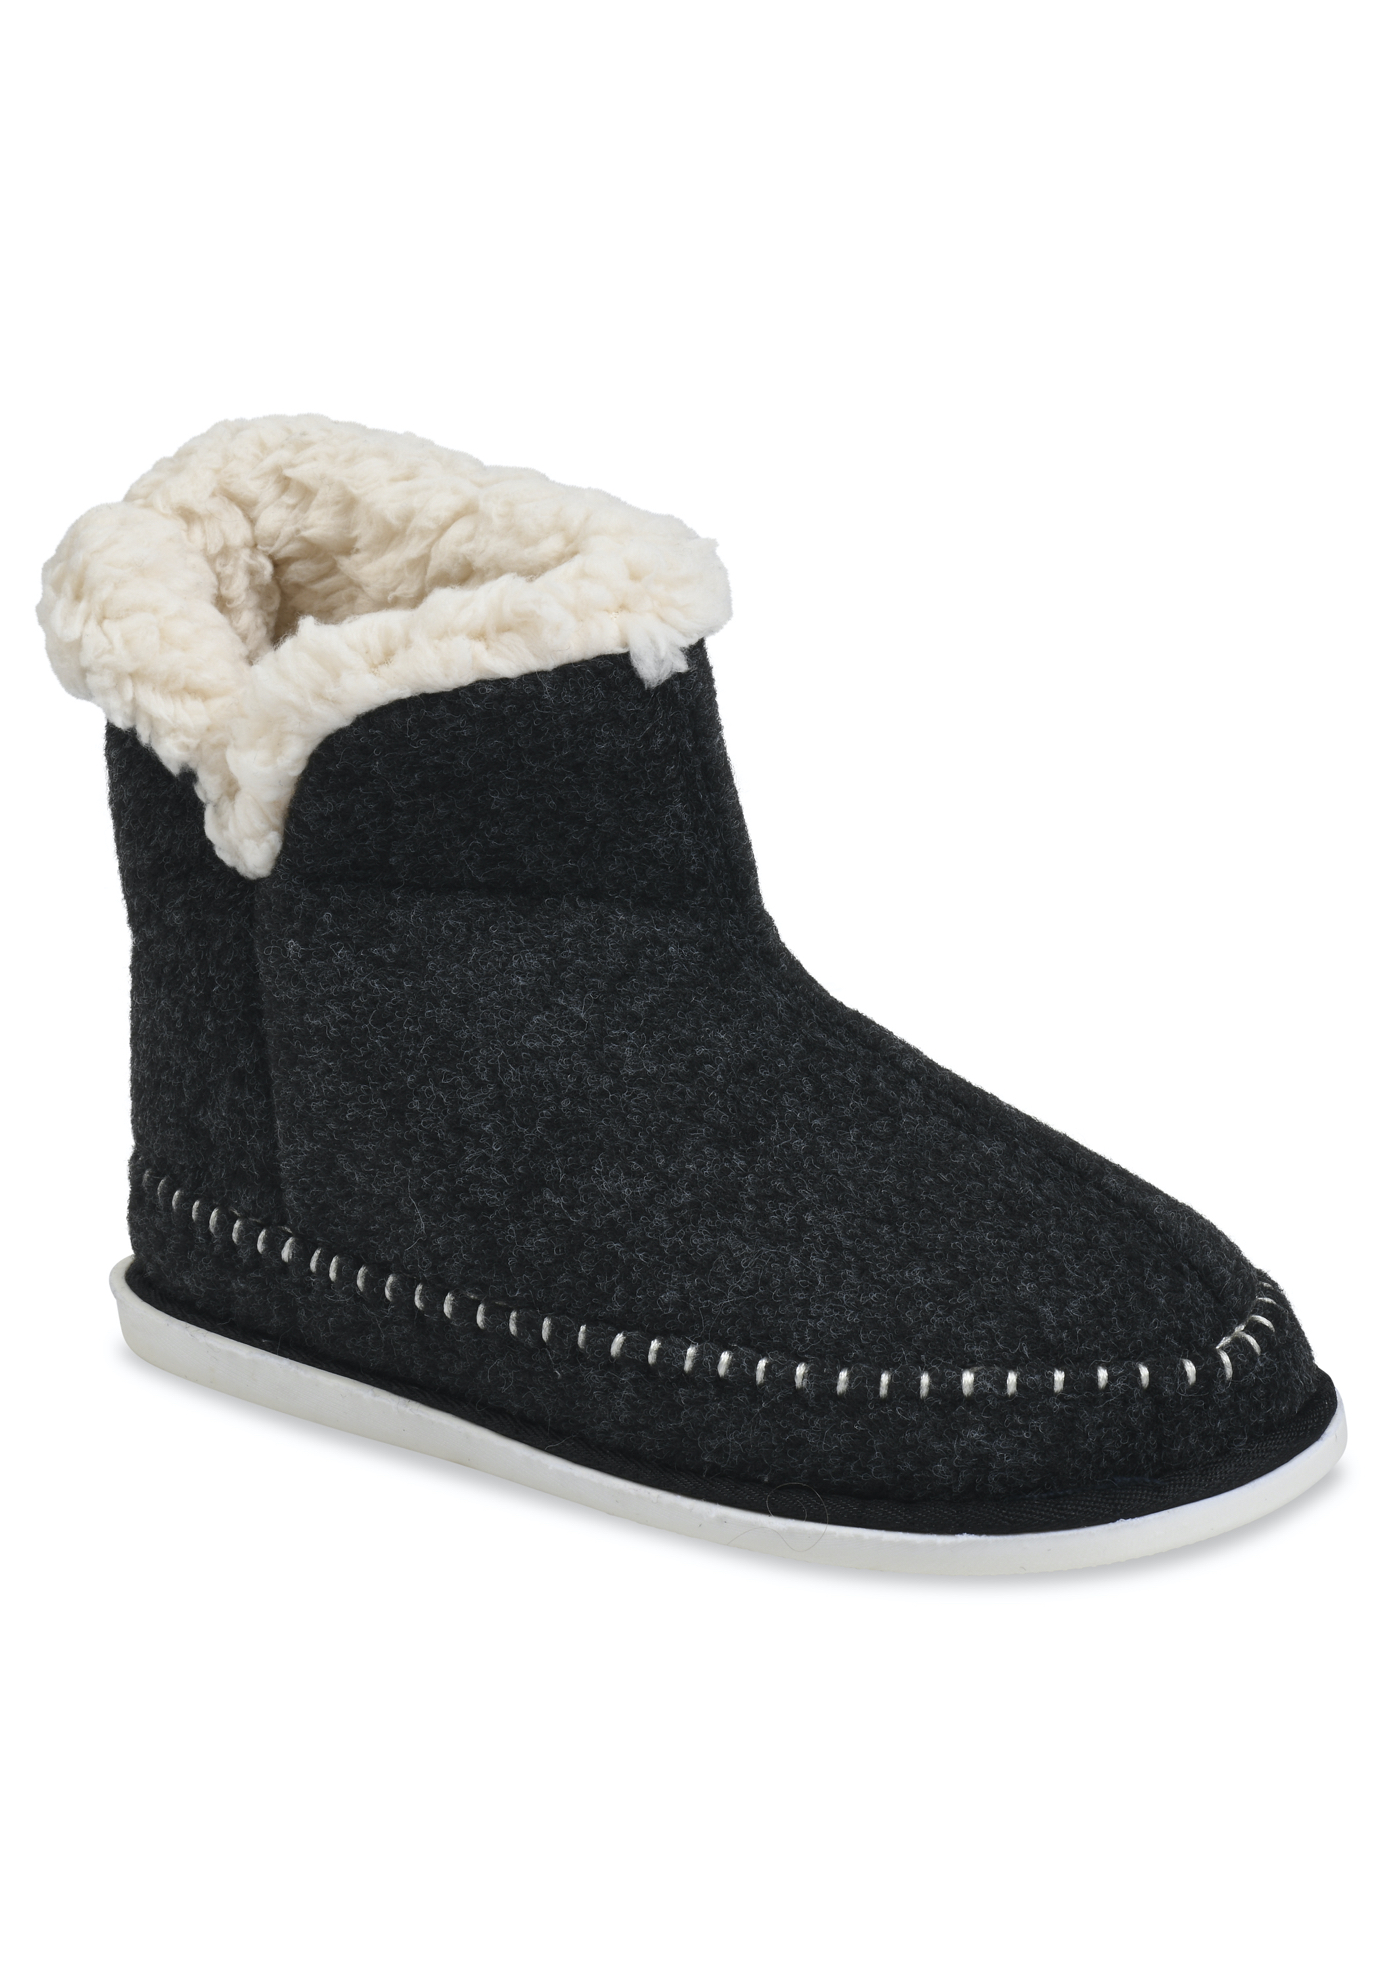 Faux Fur Wool Moccasin Slipper Boot, 